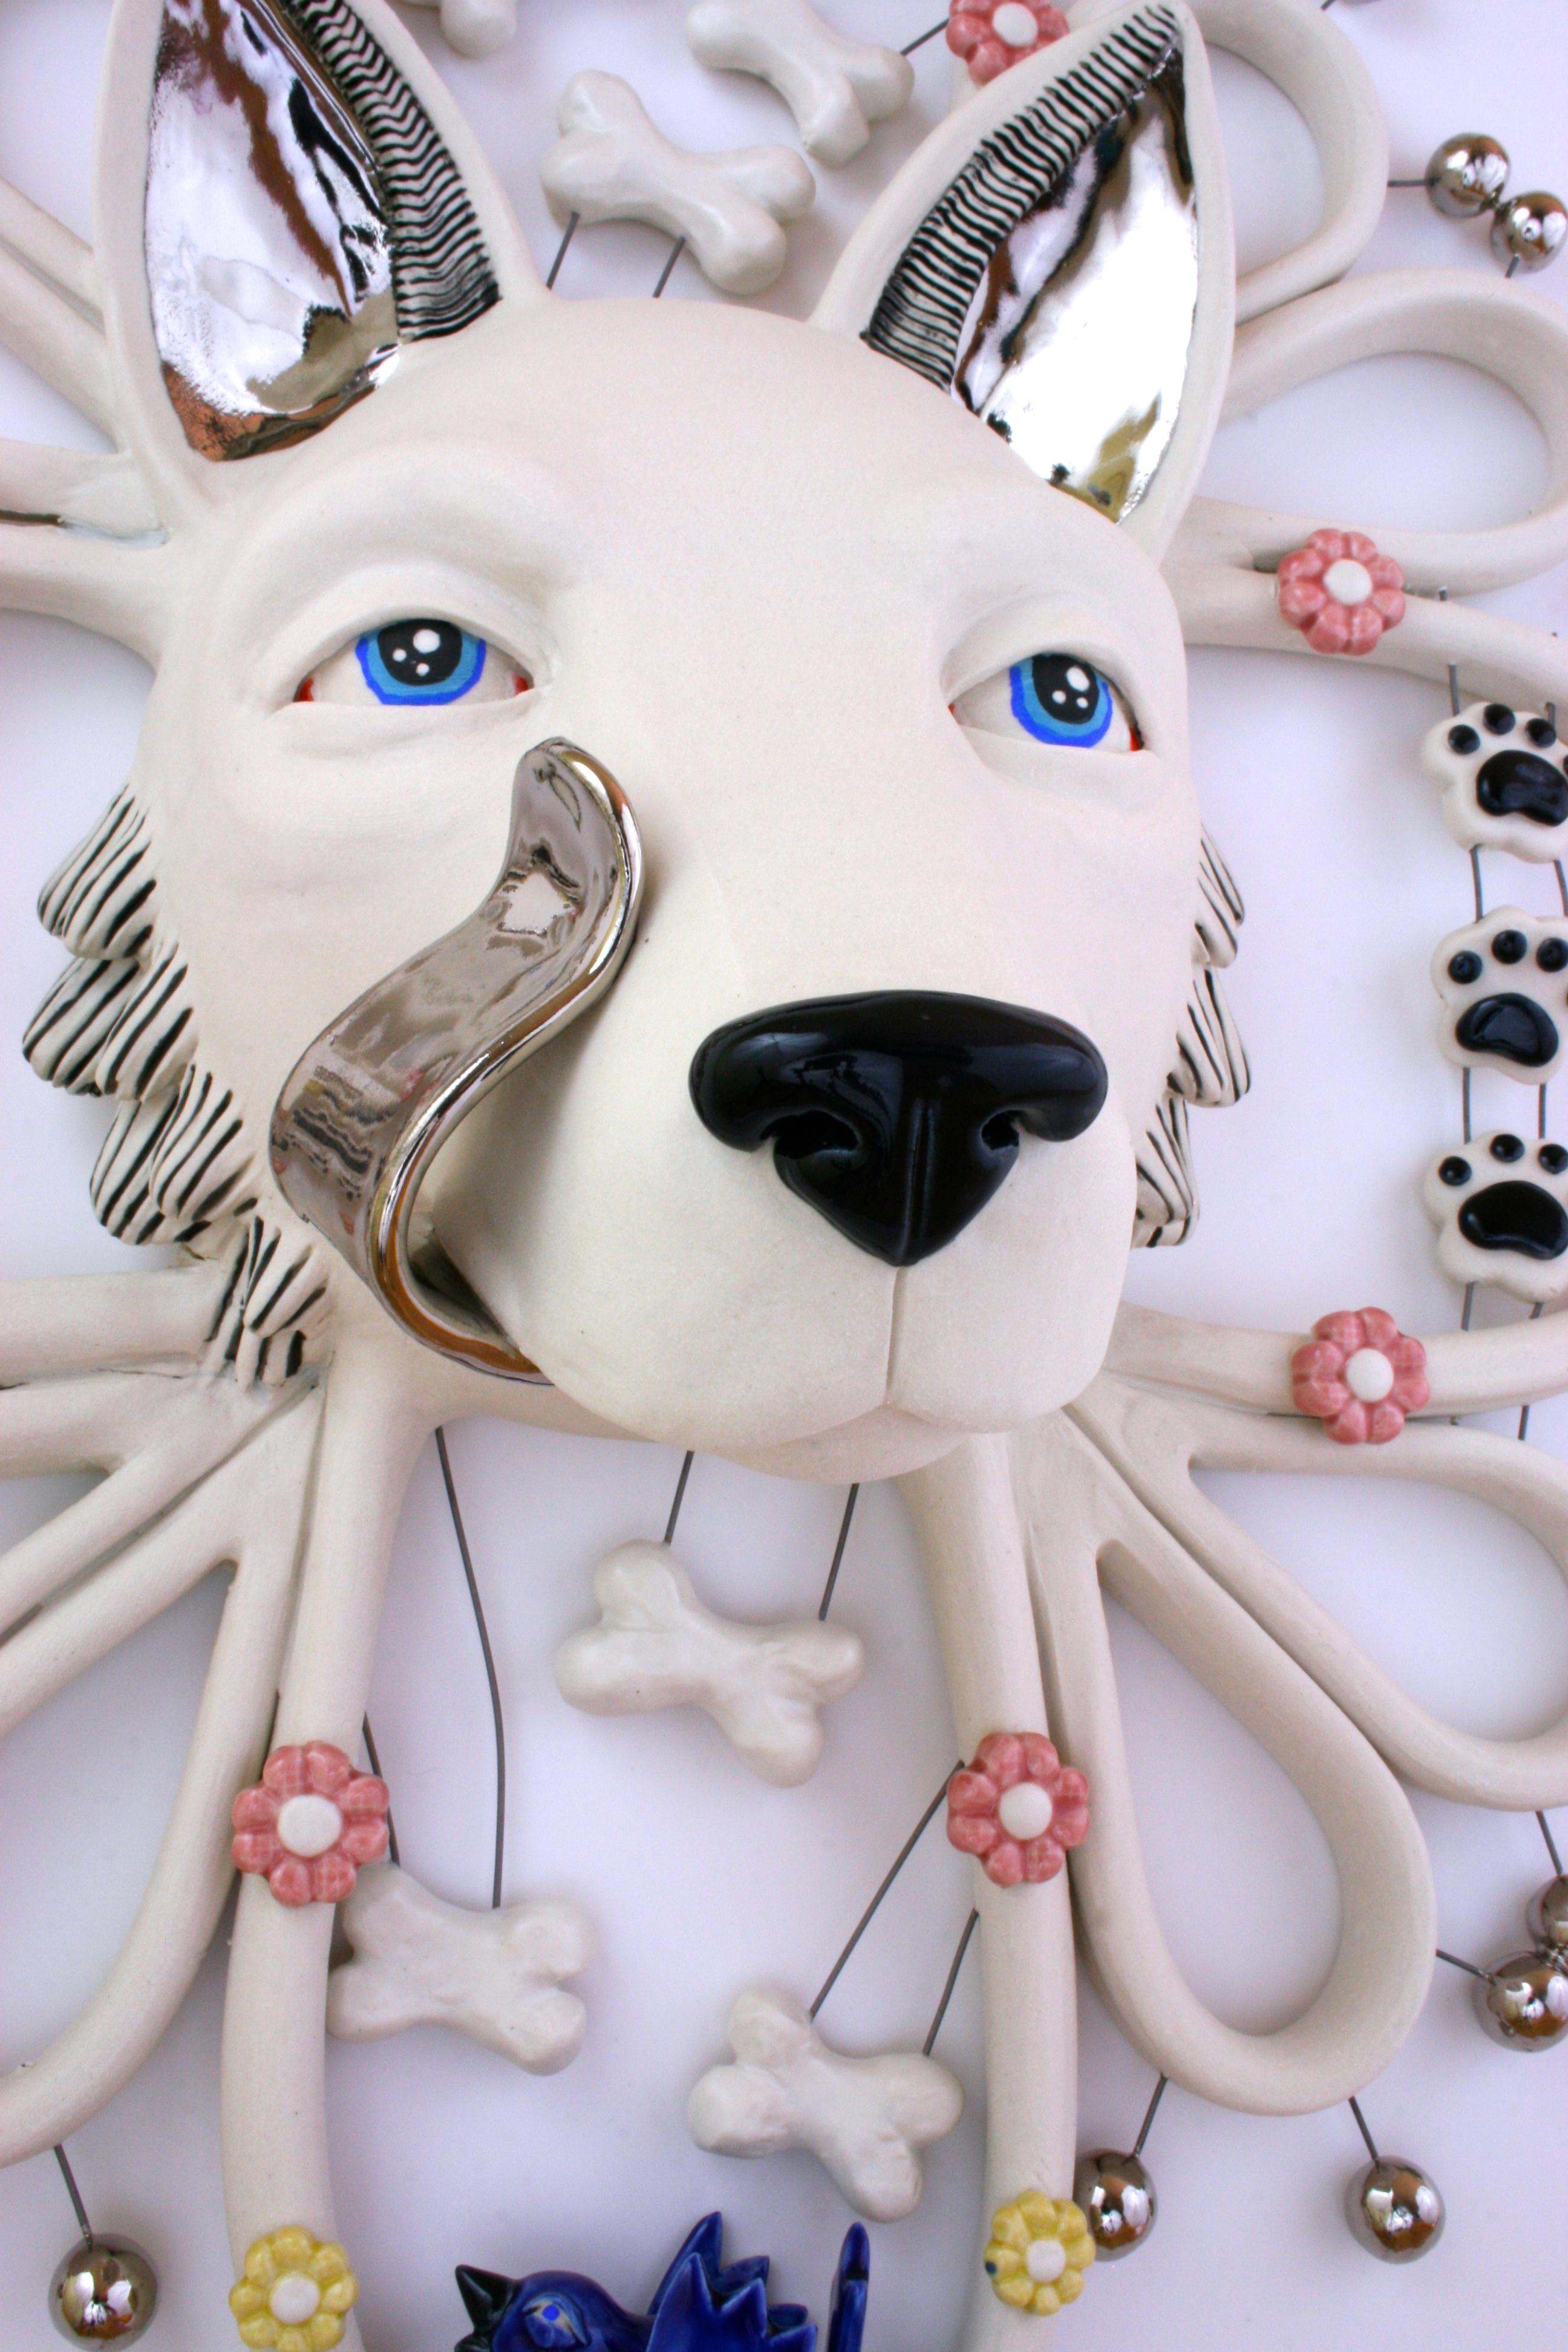 SILVER TONGUED WOLF - porcelain ceramic sculpture of wolf, bones, birds, flowers - Sculpture by Taylor Robenalt